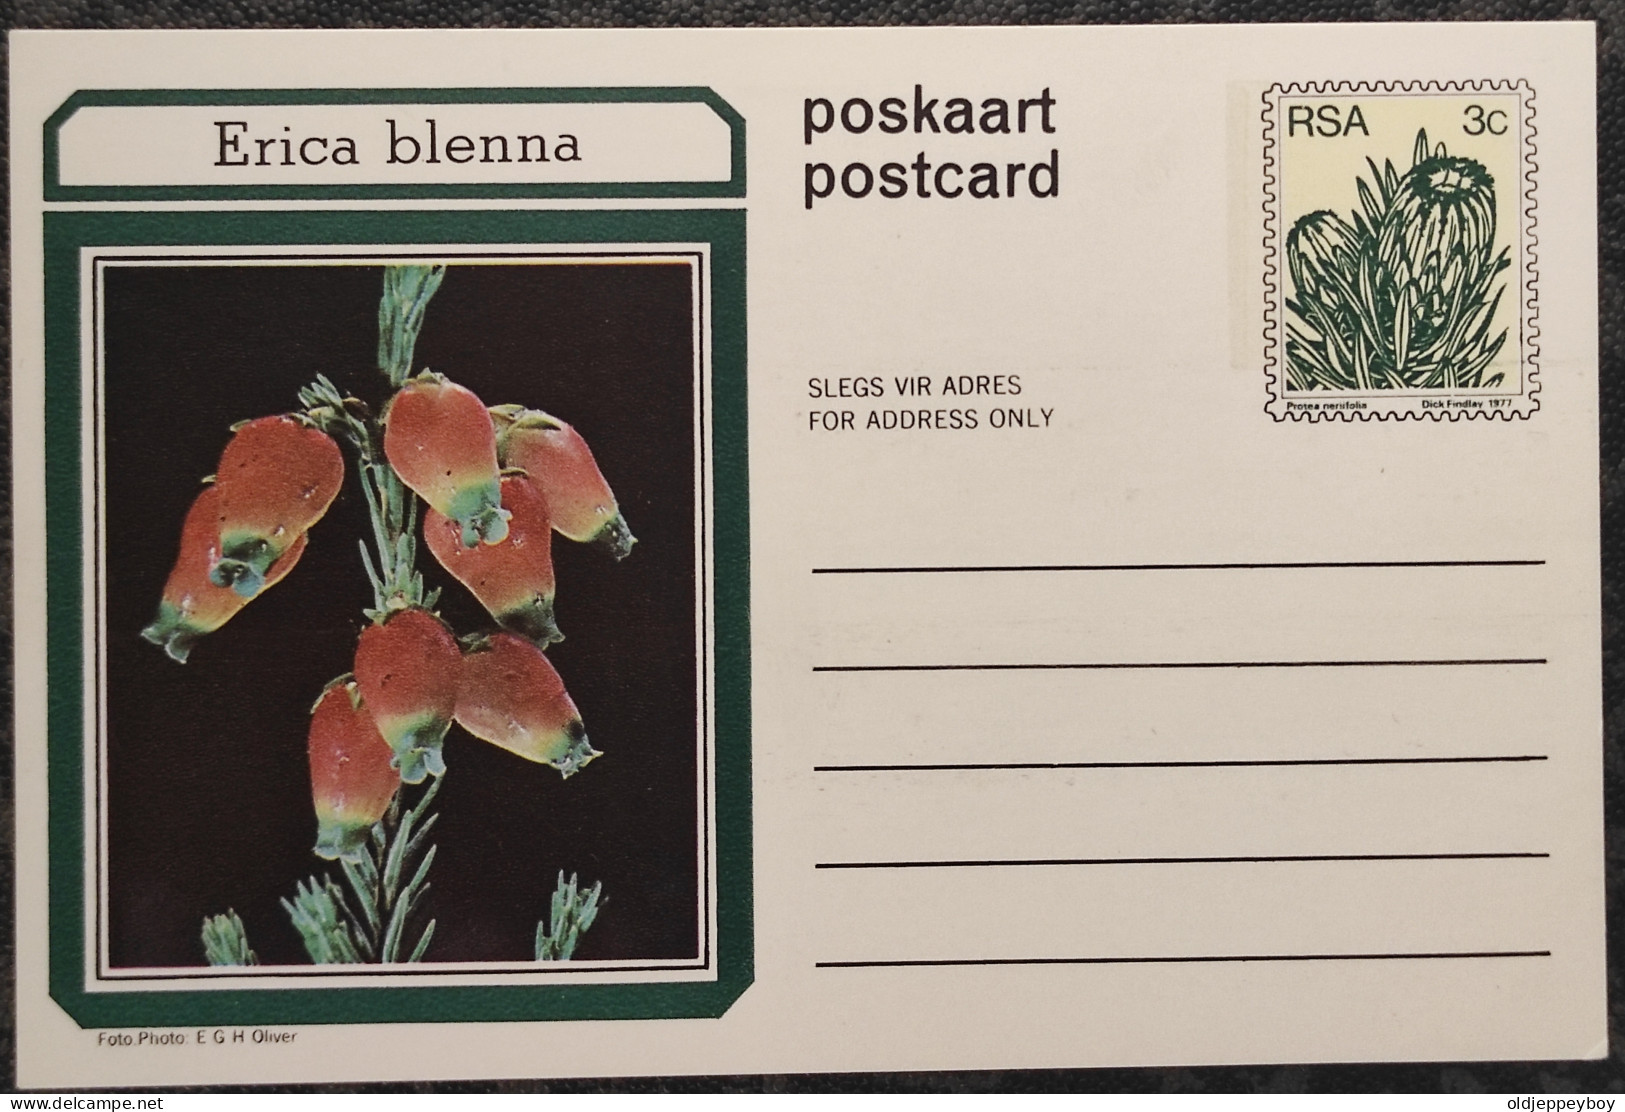 3c SOUTH AFRICA Postal STATIONERY CARD Illus ERICA BLENNA FLOWER Cover Stamps Flowers Rsa - Briefe U. Dokumente